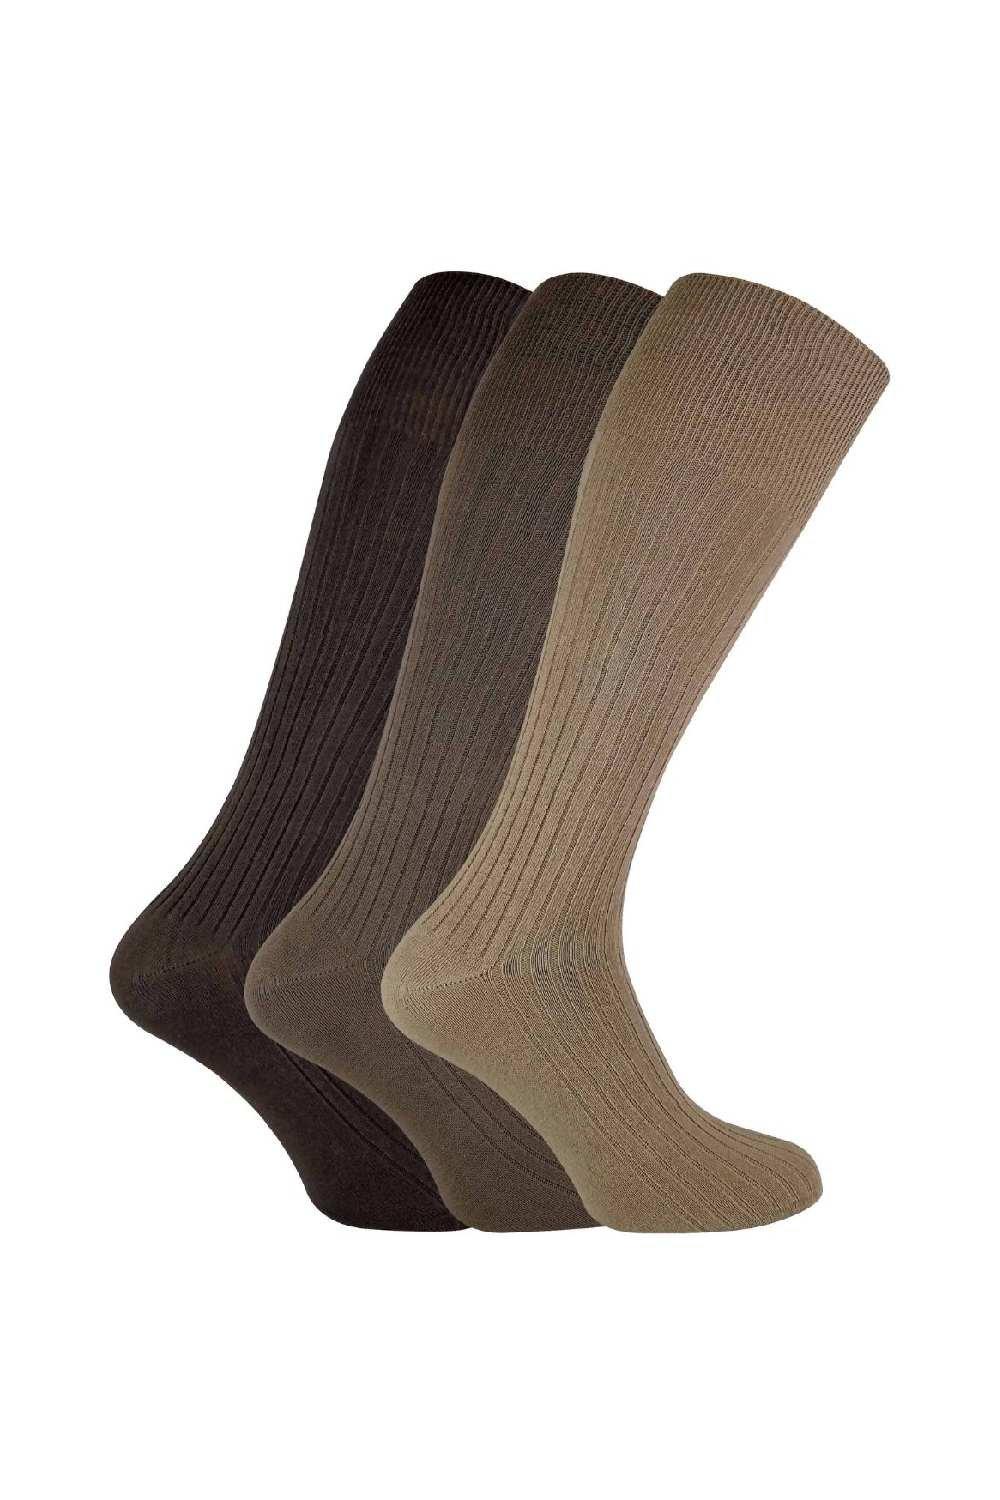 3 Pairs 100% Cotton Long Soft Knee High Socks